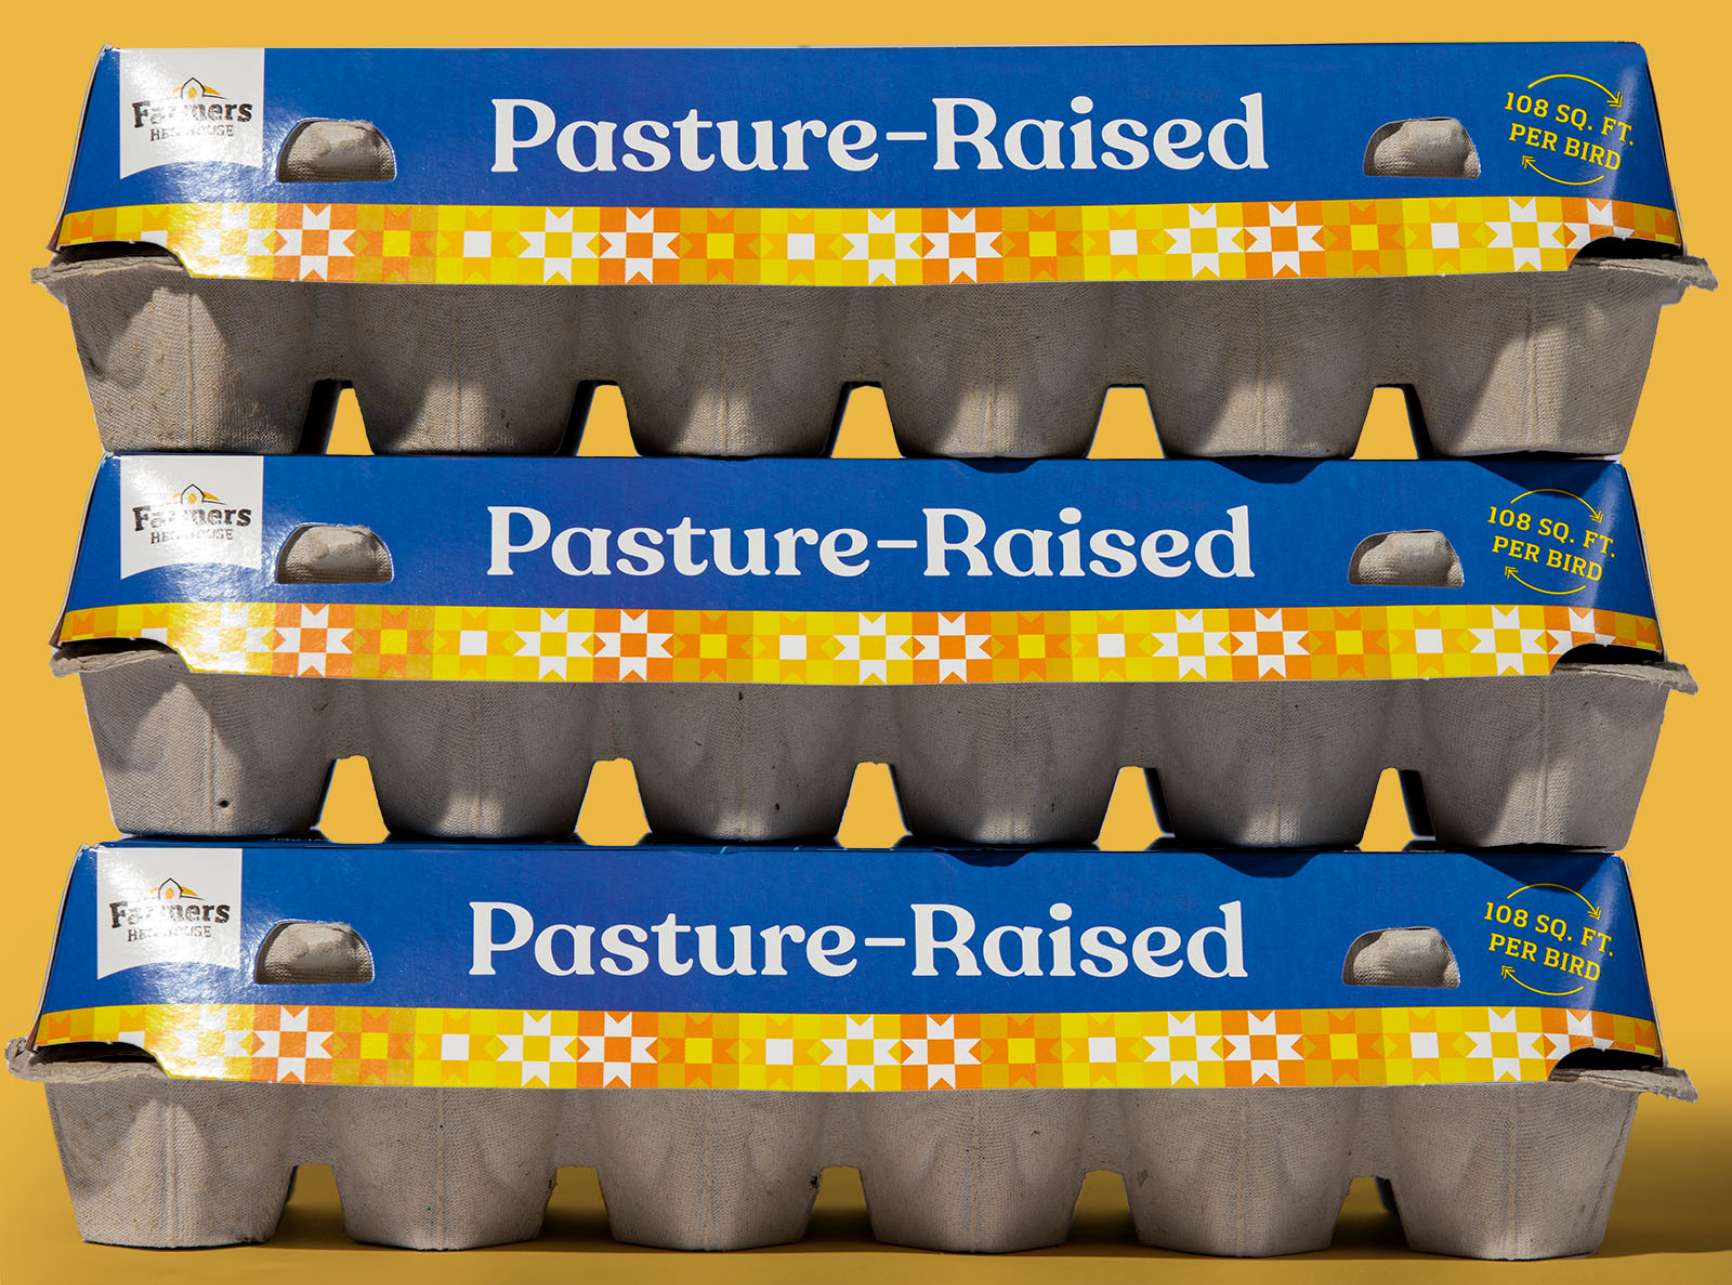 Three stacked pasture-raised egg cartons